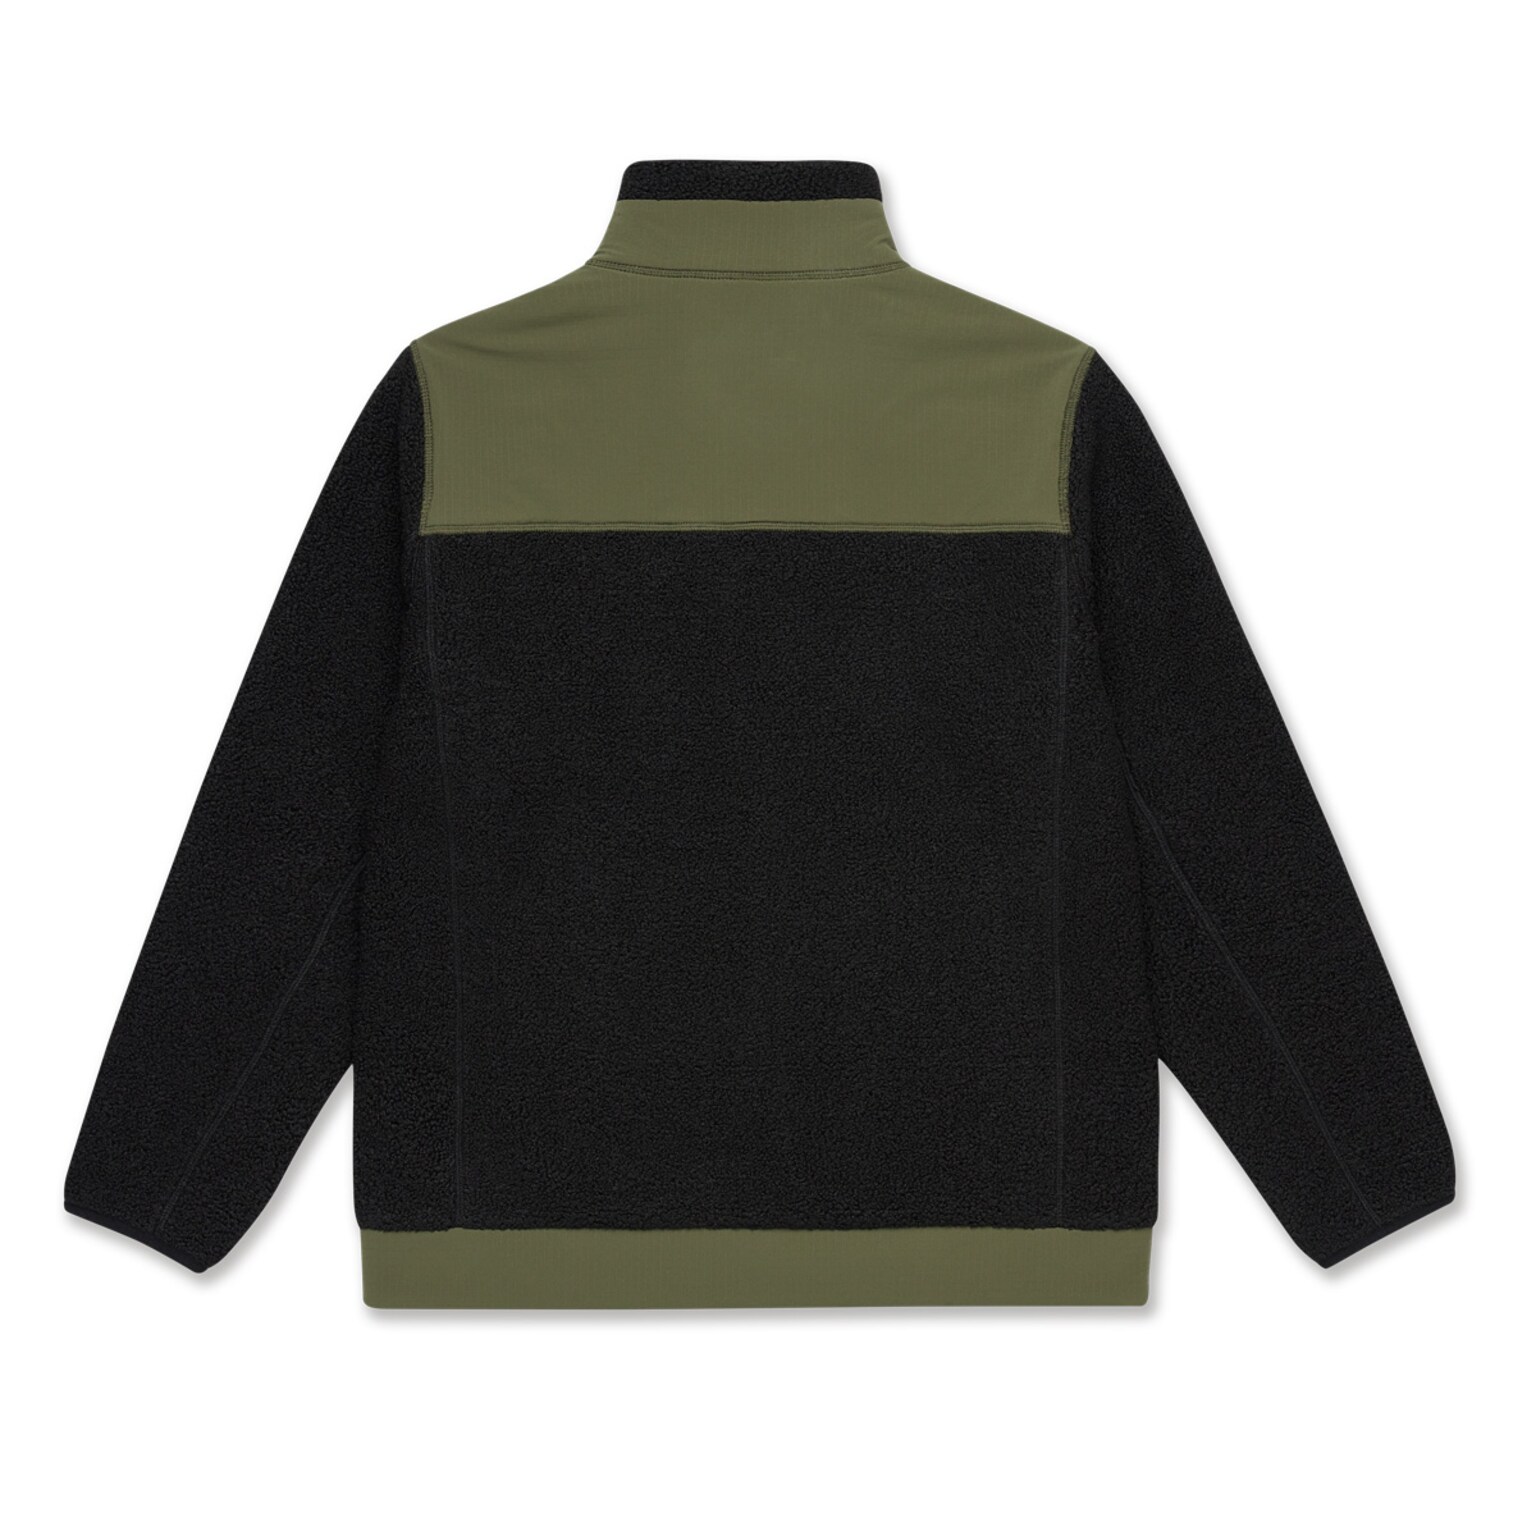 Everyday Fleece Jacket Midnight Black x Forest Green